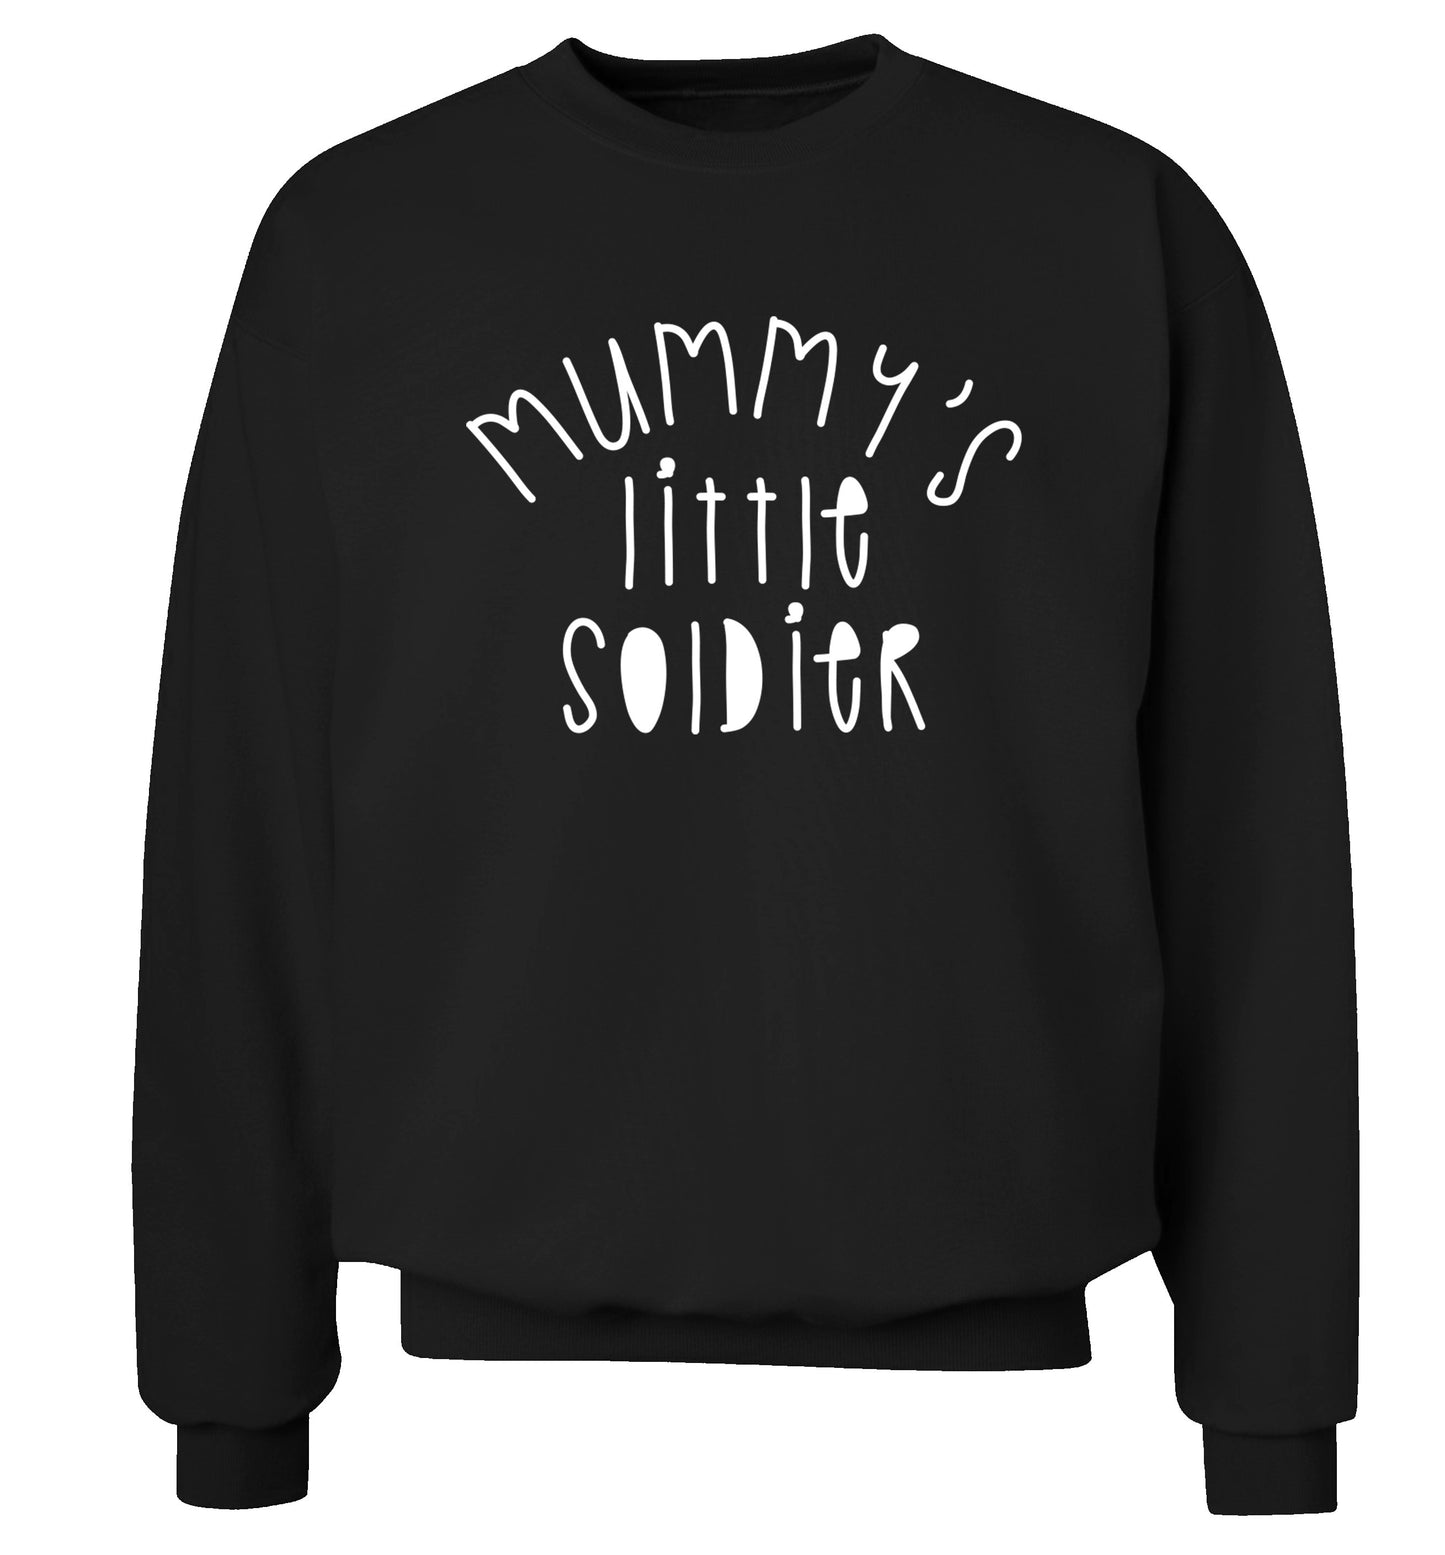 Mummy's little soldier Adult's unisex black Sweater 2XL